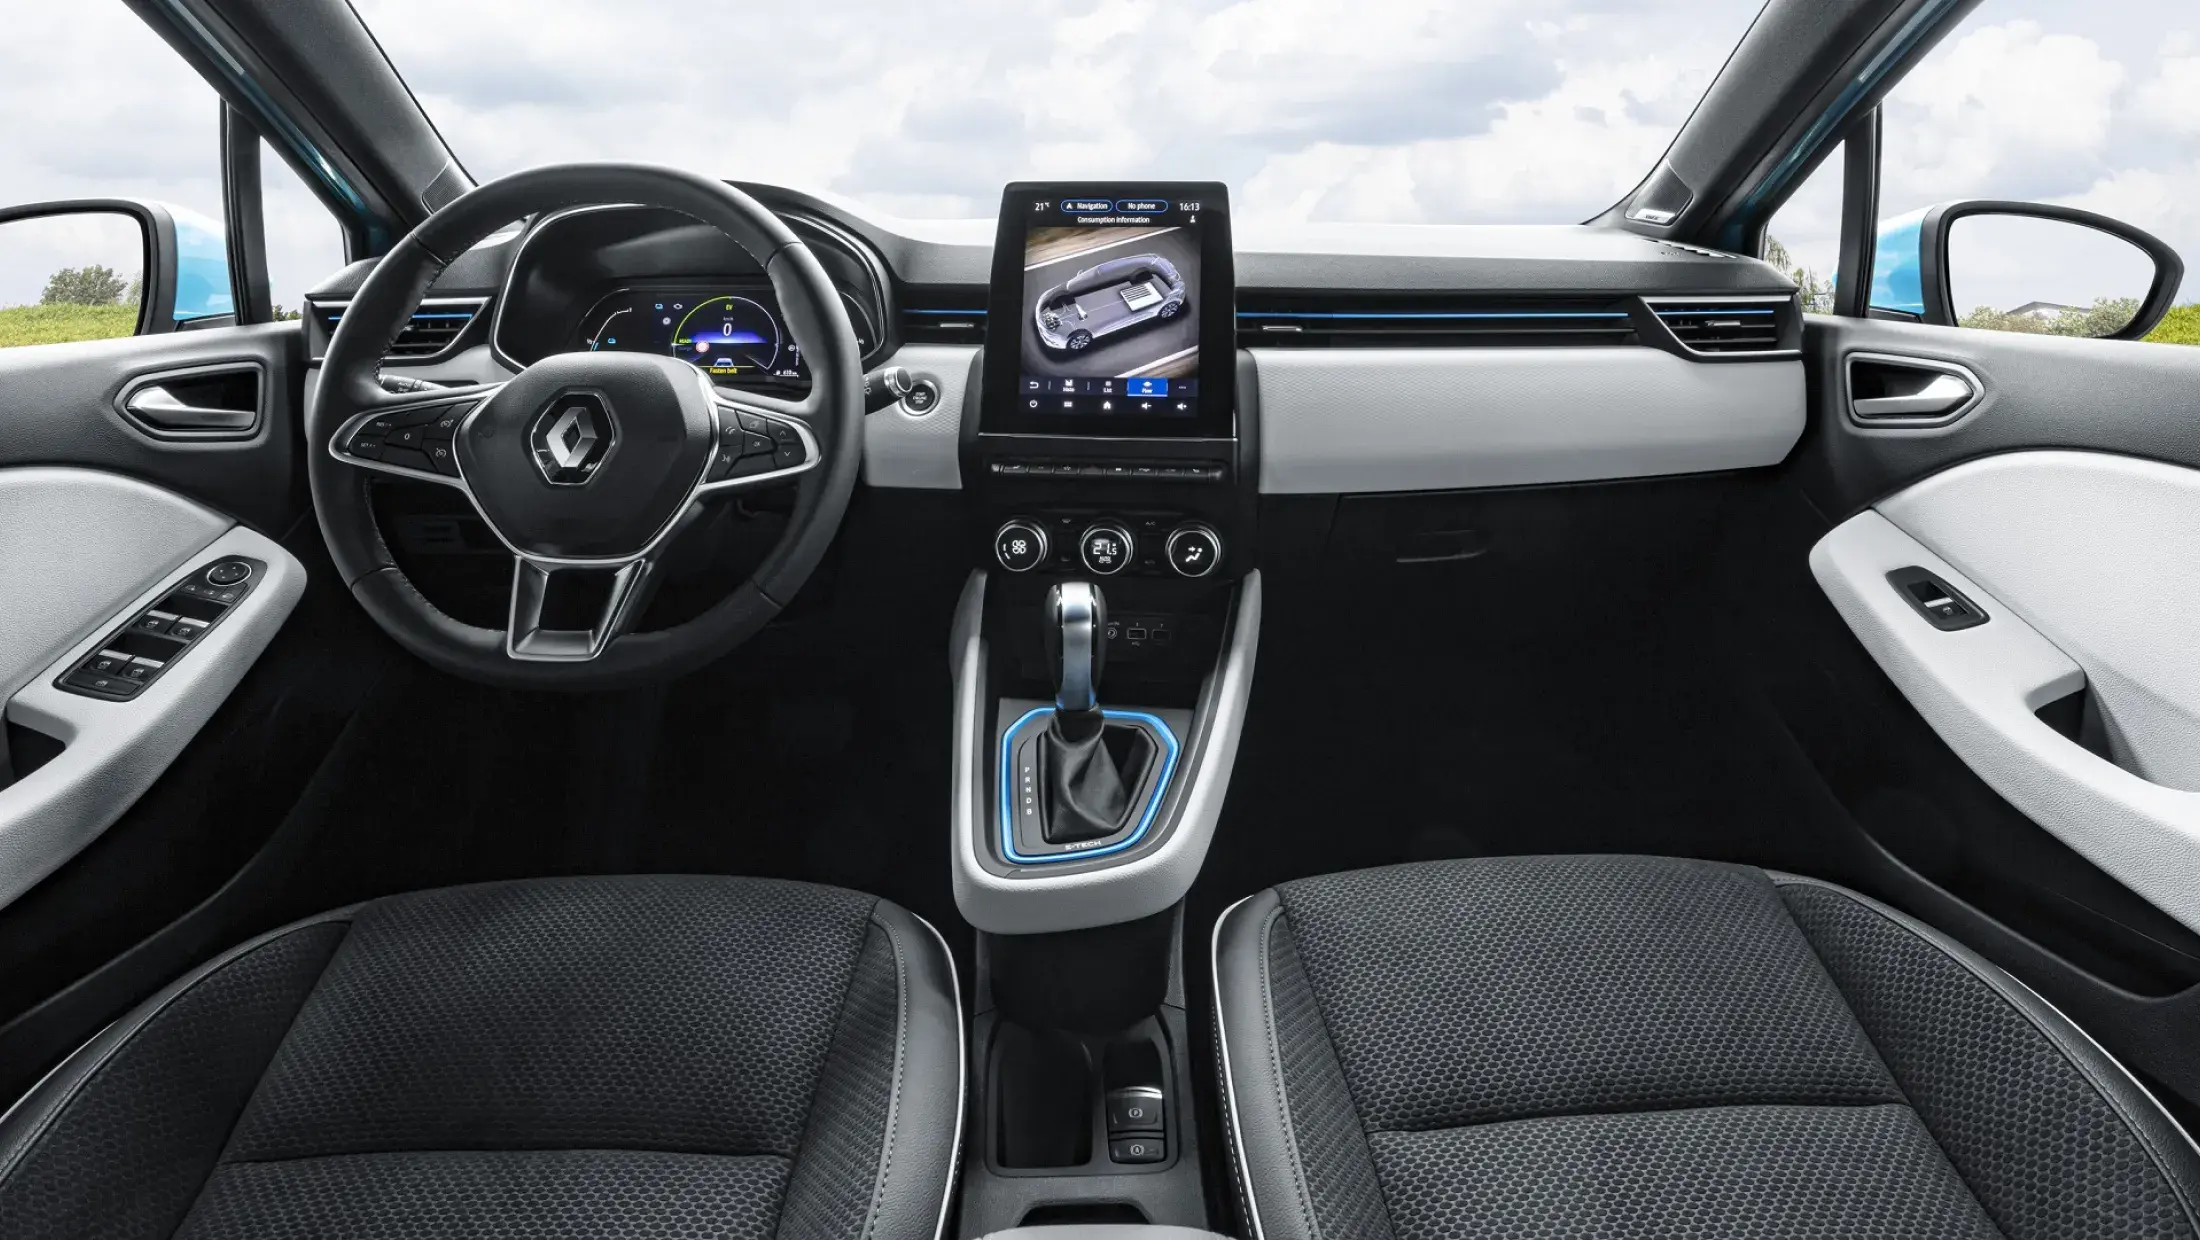 Renault Clio Hybrid